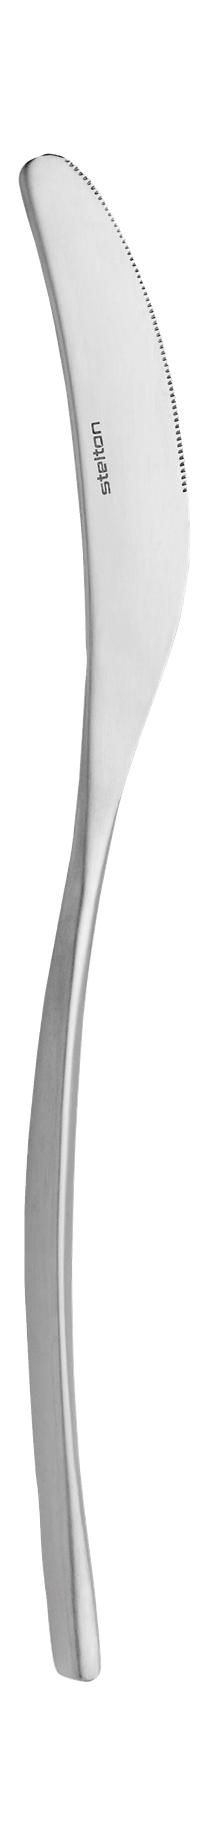 Stelton Capelano bordskniv